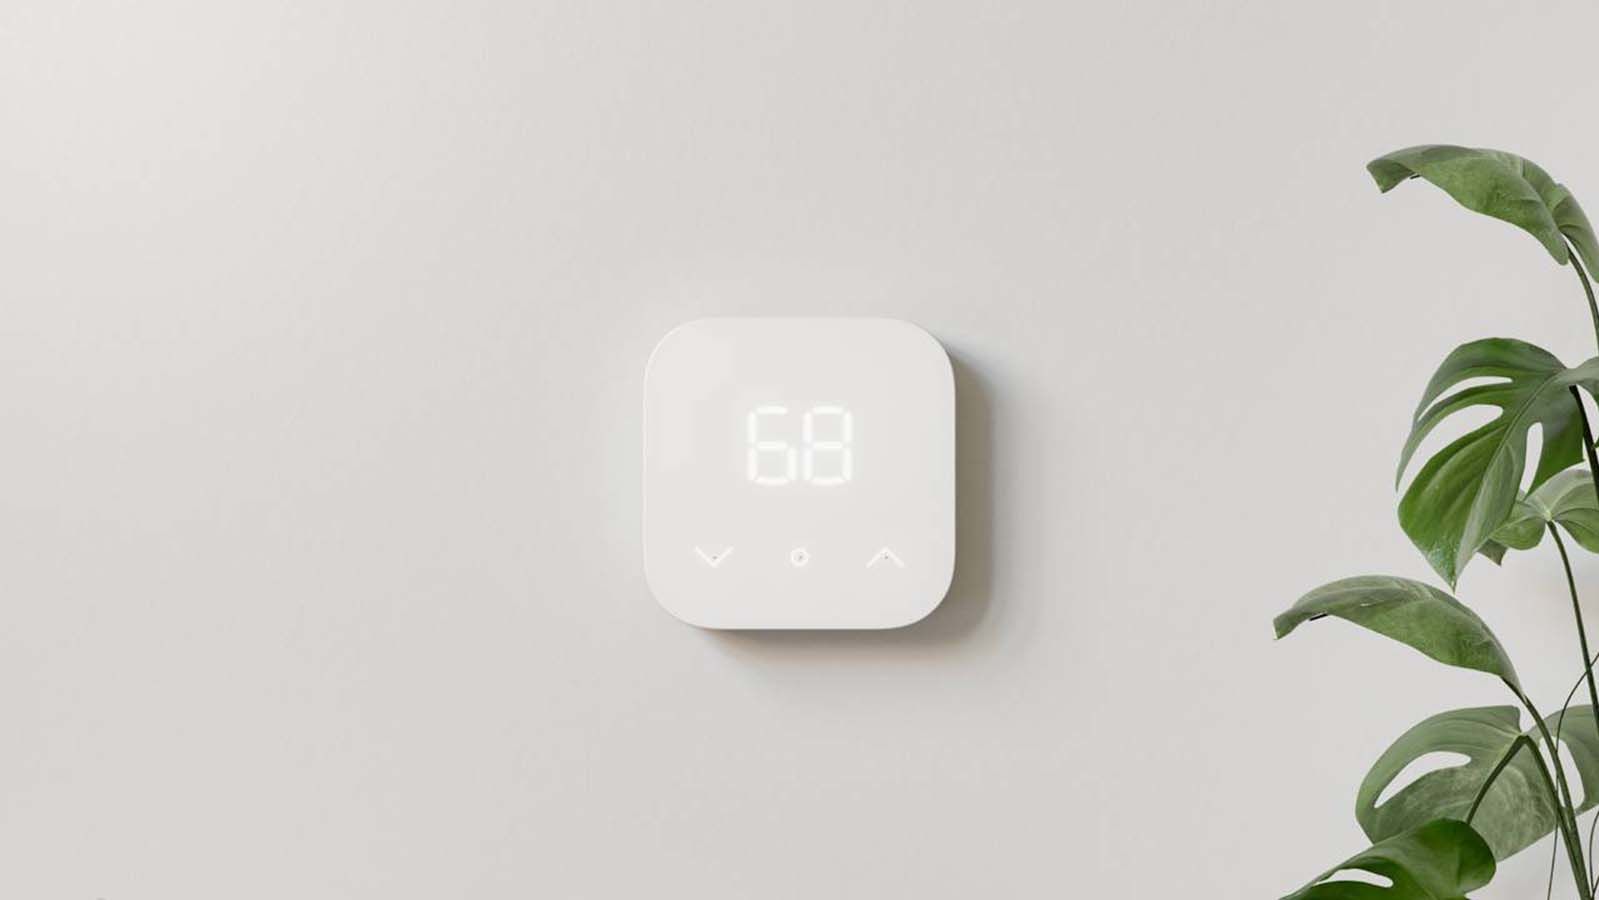 Alexa Smart Thermostats - Best Buy